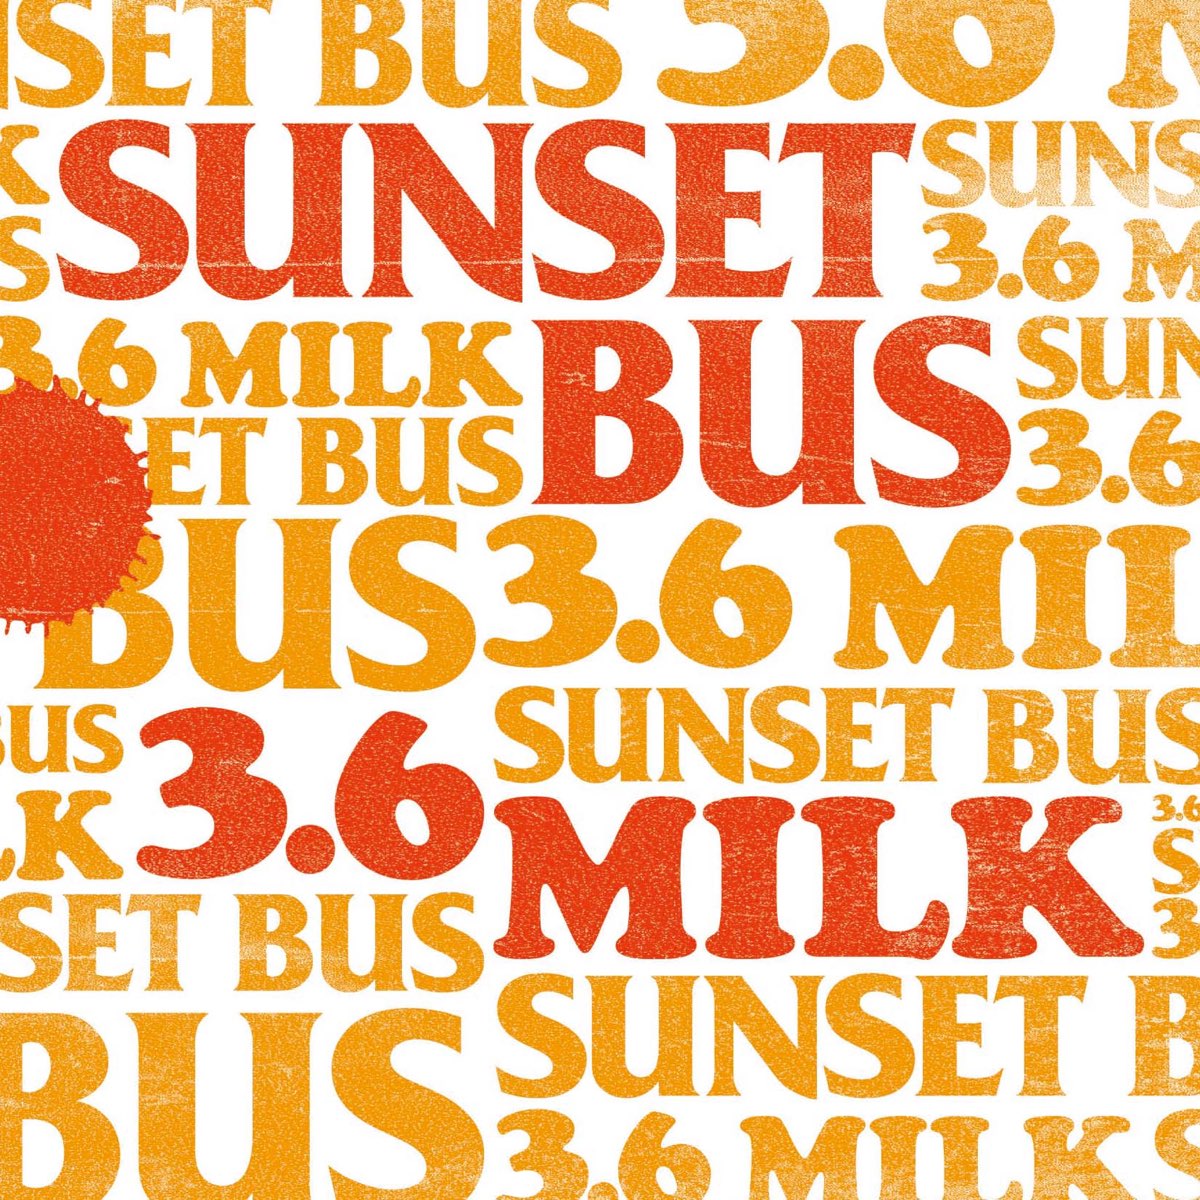 Busing песни. Bus"Sunset.